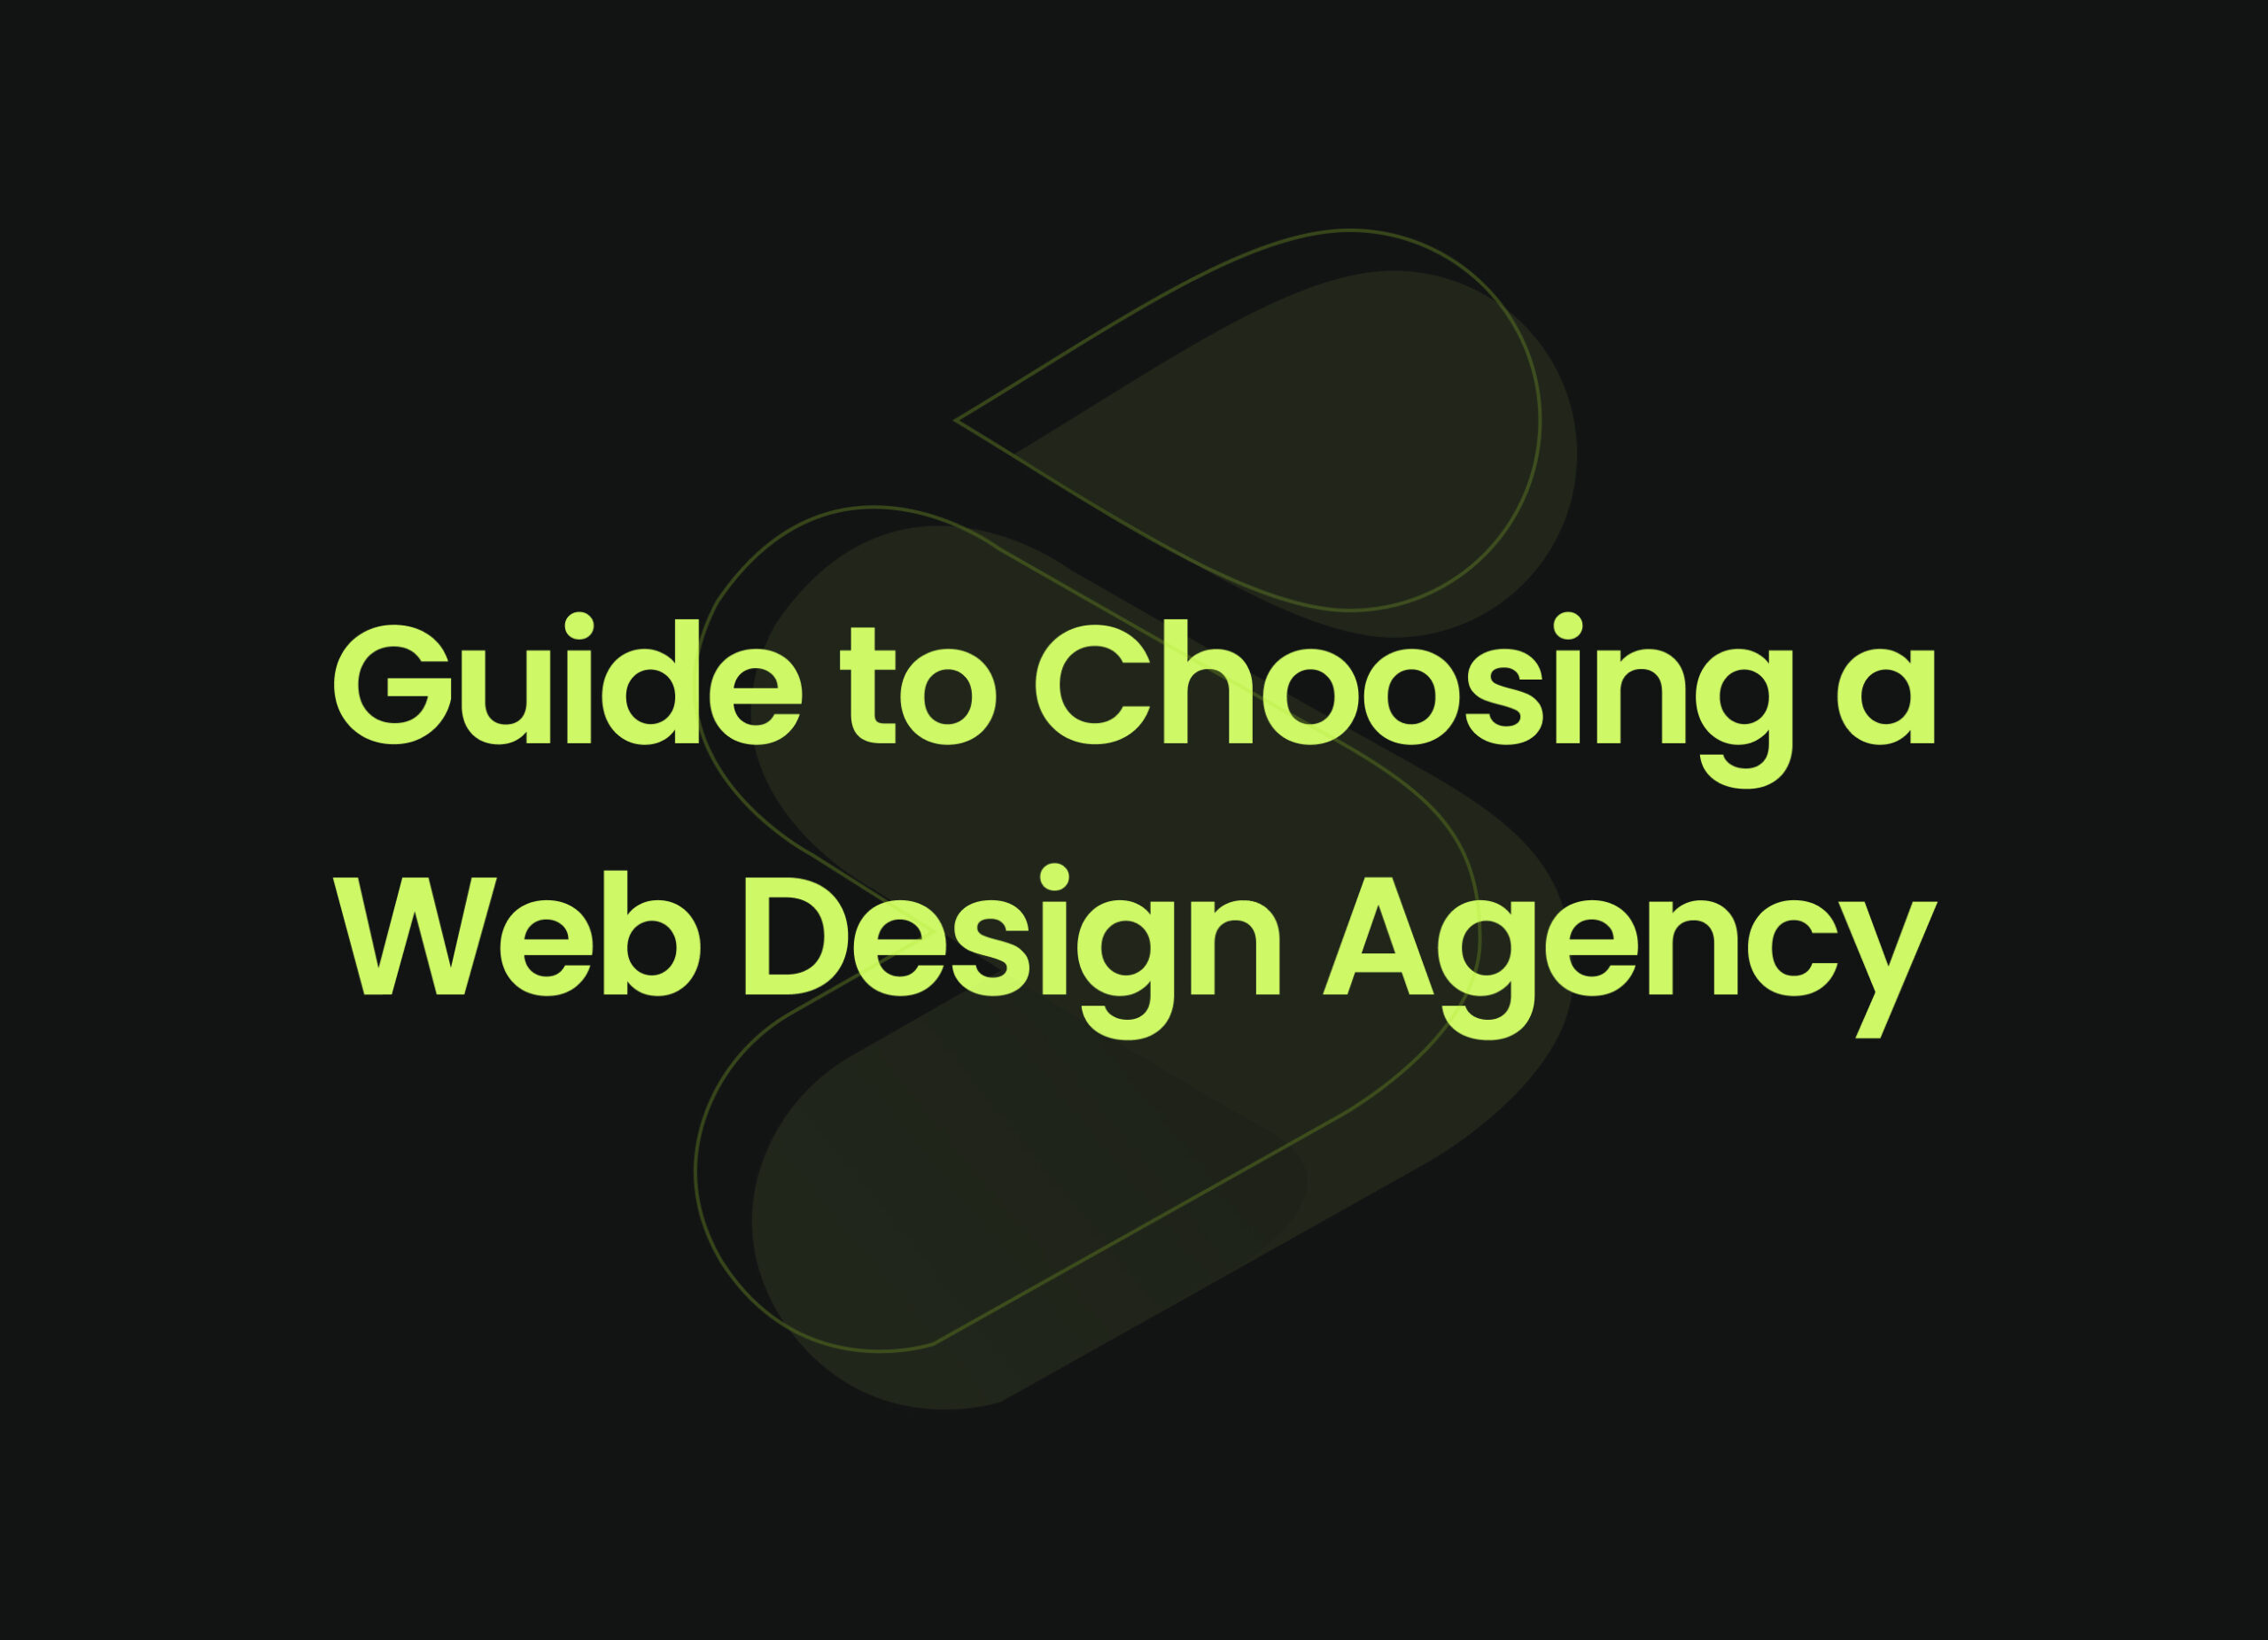 Web Design Agency Guide